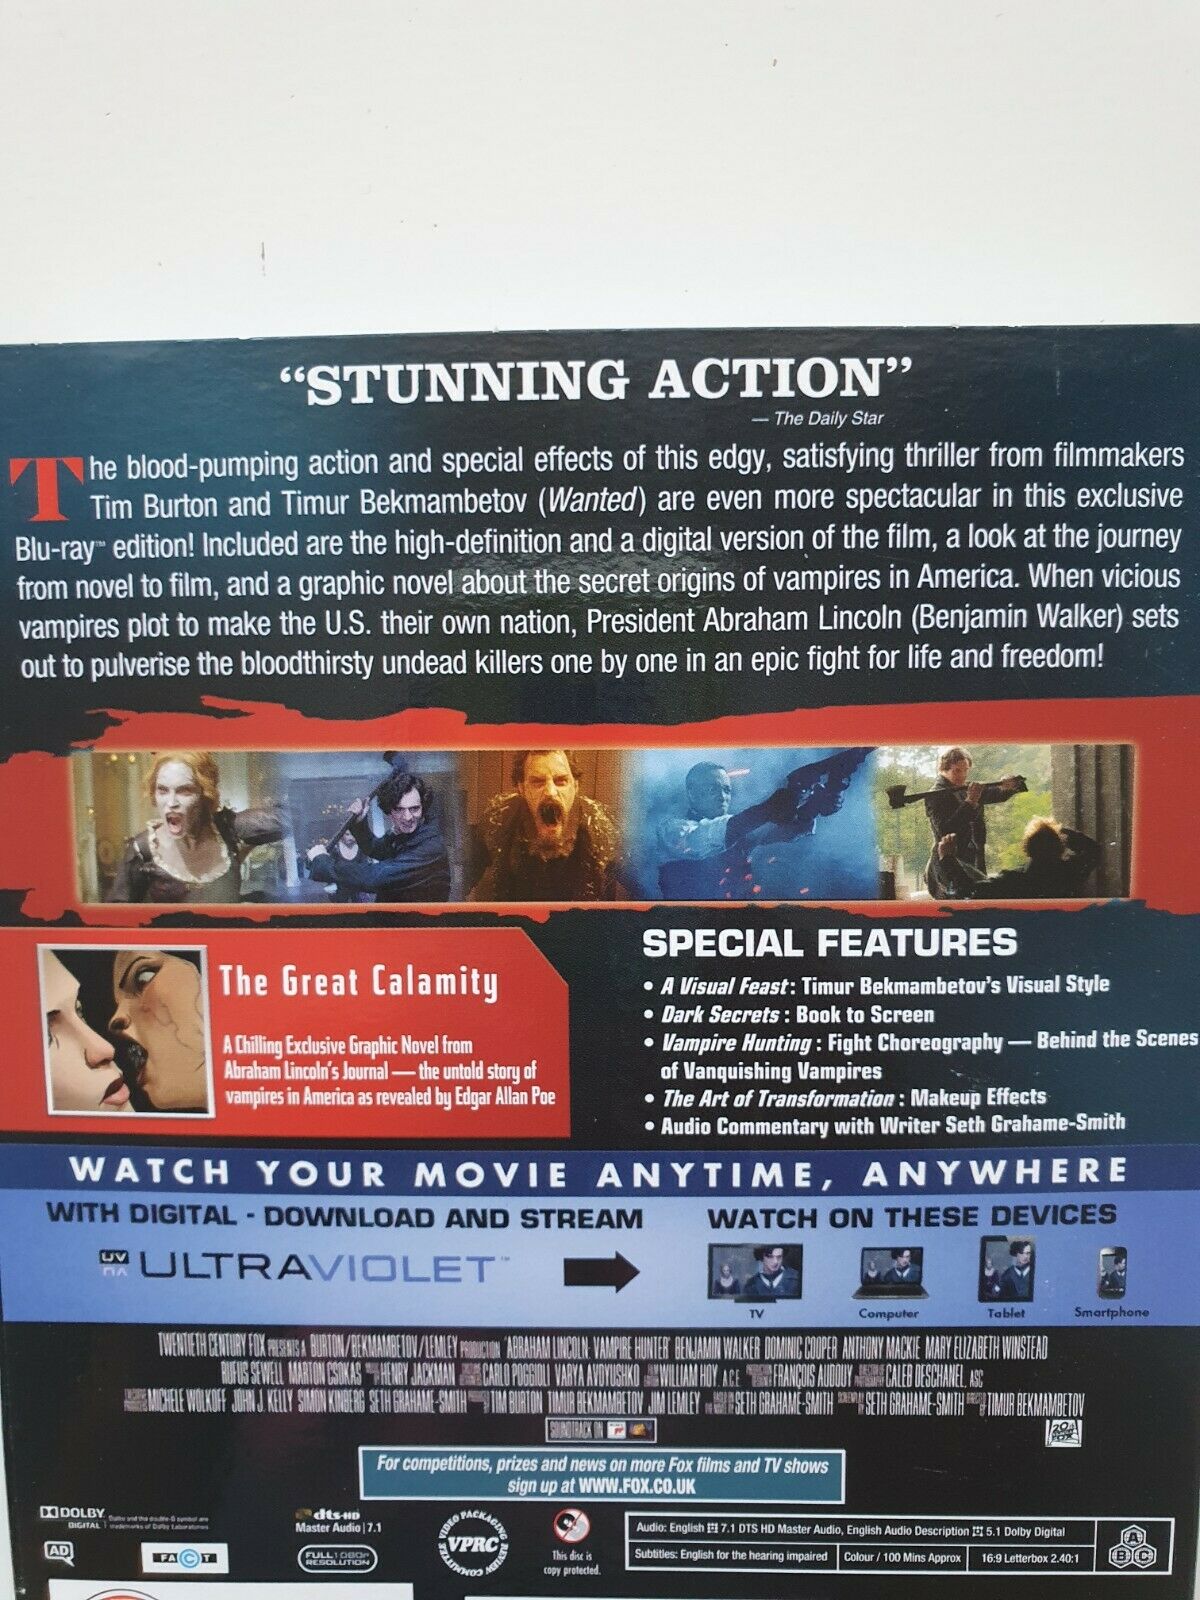 5039036054959 Abraham Lincoln - Vampire Hunter Blu-ray + Digital English 2012 NEW SEALED